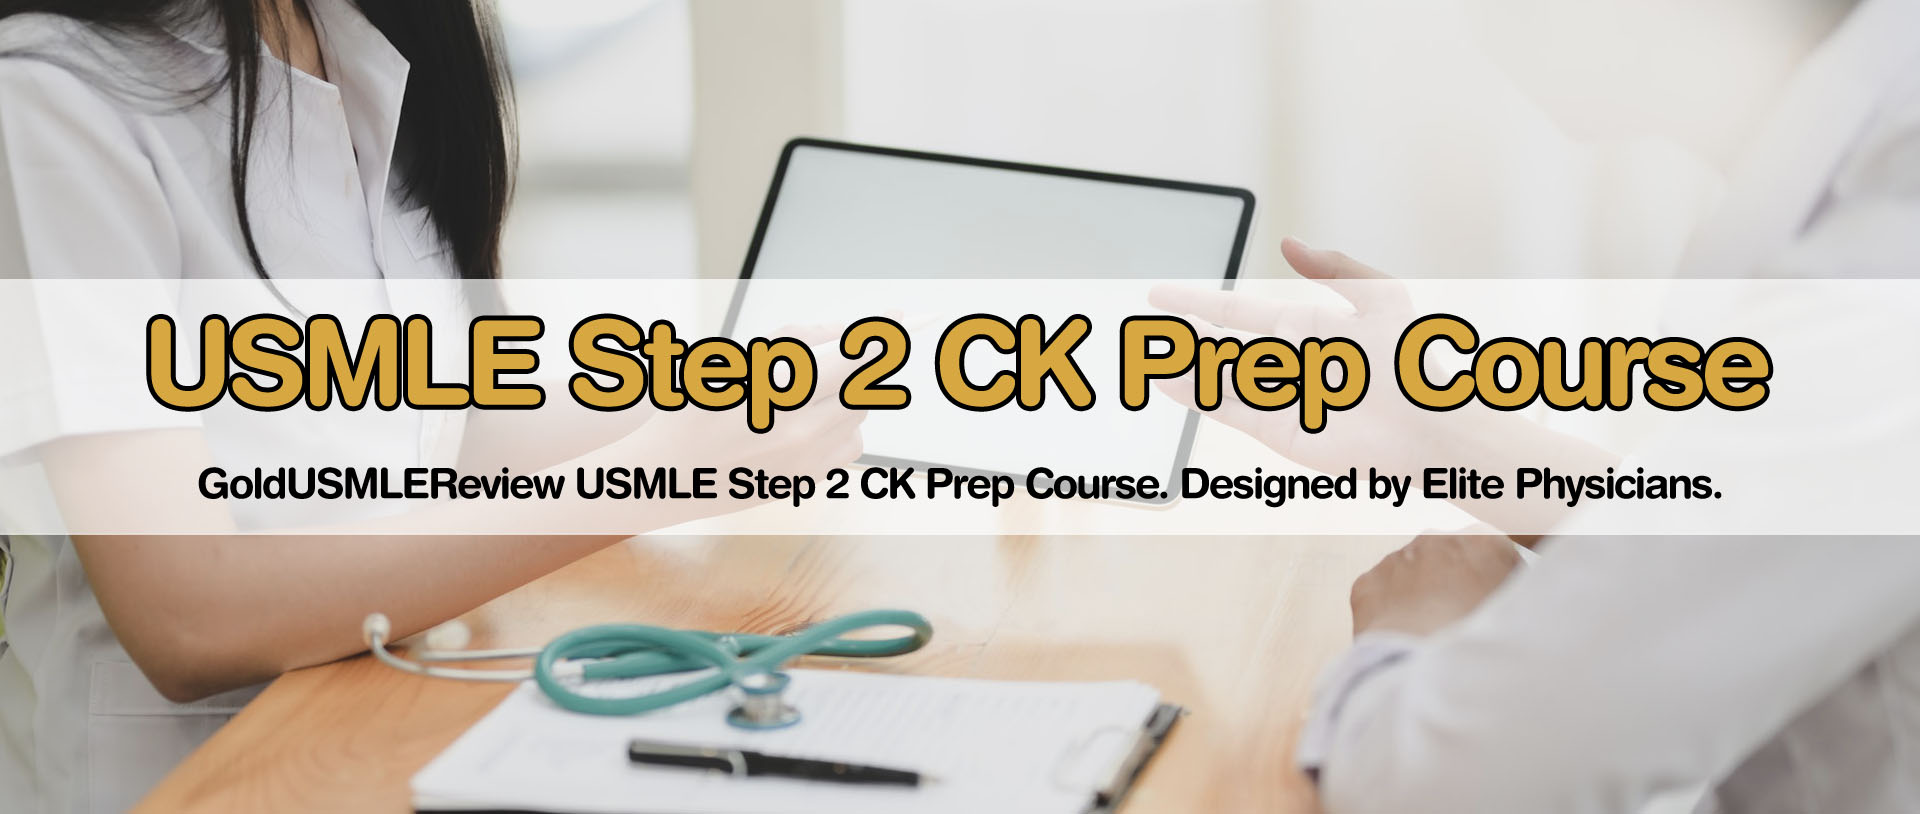 USMLE Step 2 CK Prep Course